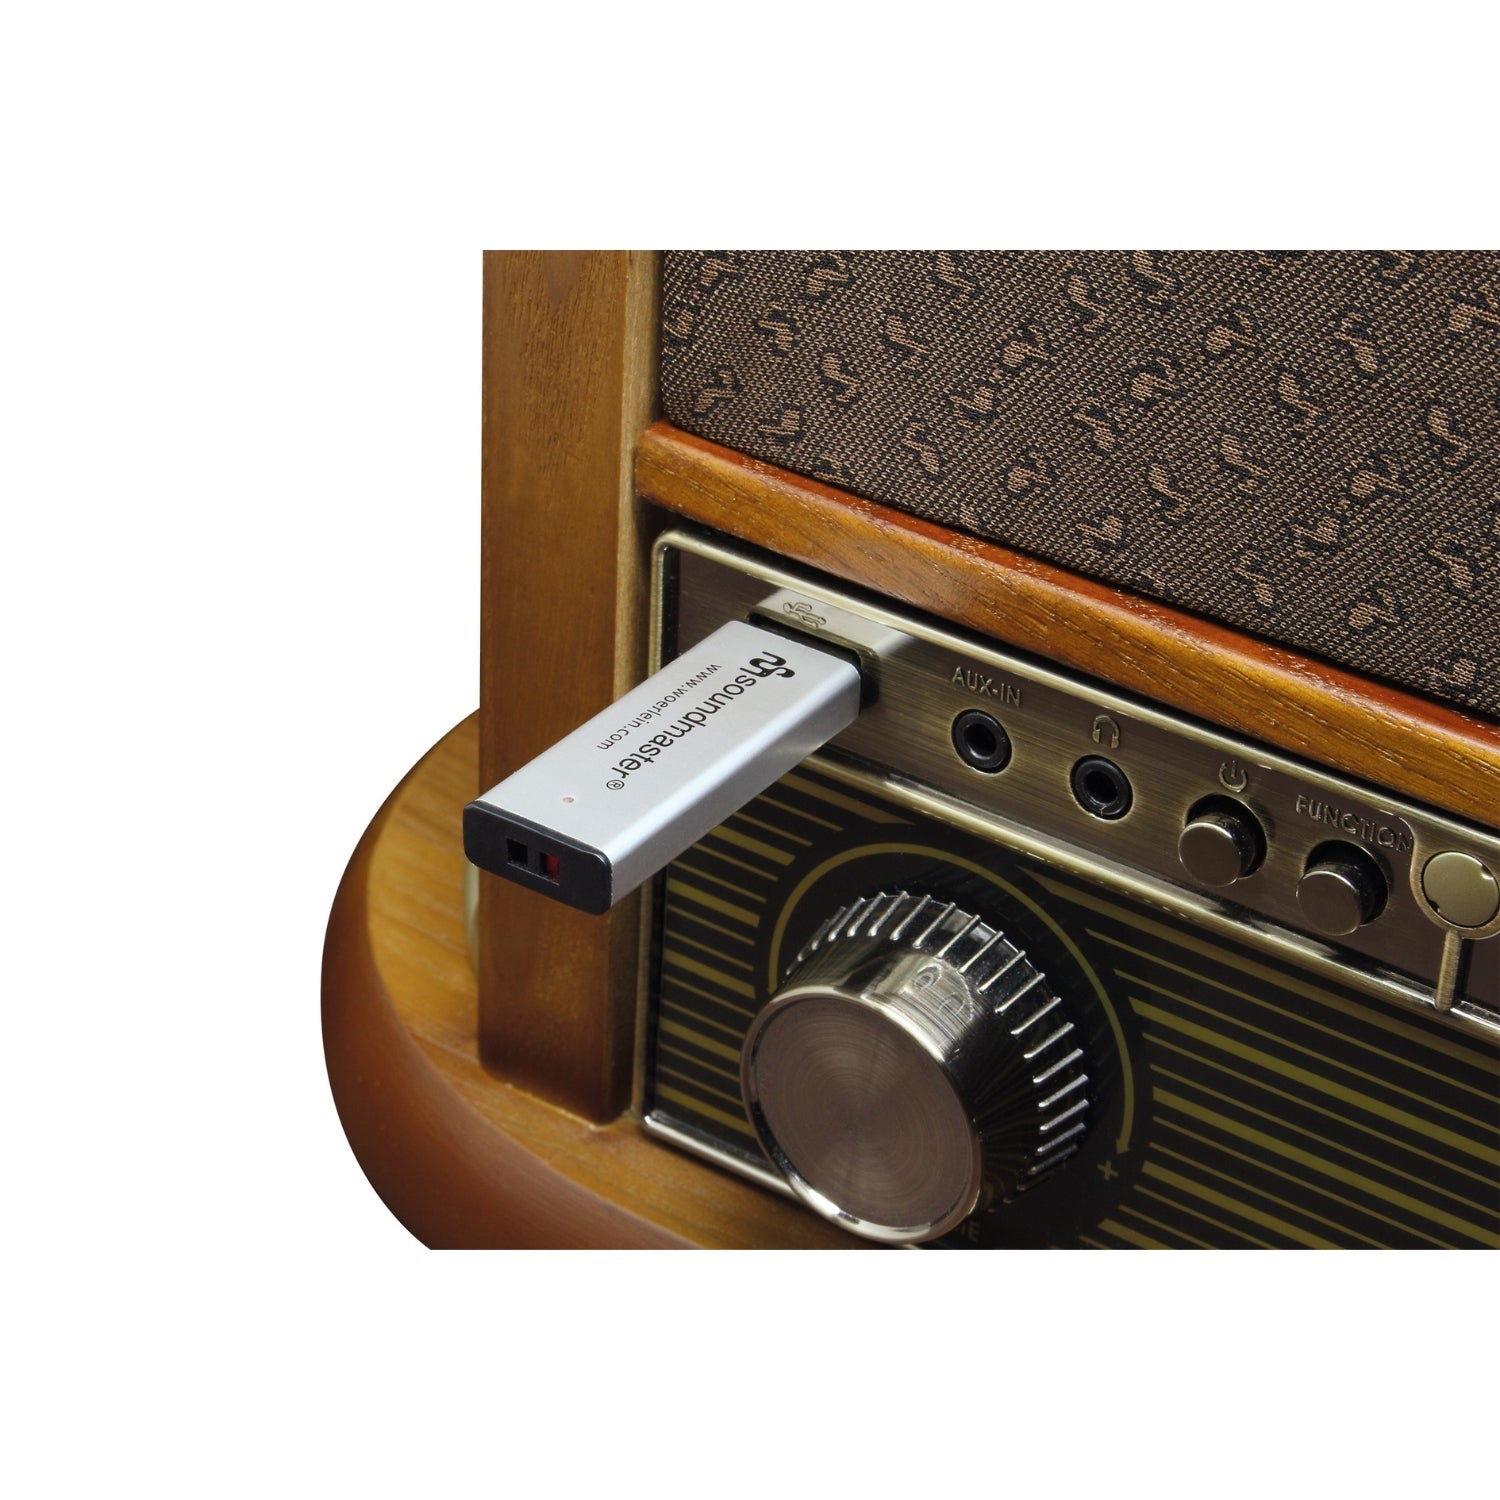 Soundmaster NR546BR Set mit Untergestell SF510 Nostalgie Stereo DAB+/UKW Digitalradio Plattenspieler inkl Audio Technica Magnettonabnehmersystem CD/MP3 USB Kassette Bluetooth Encoding